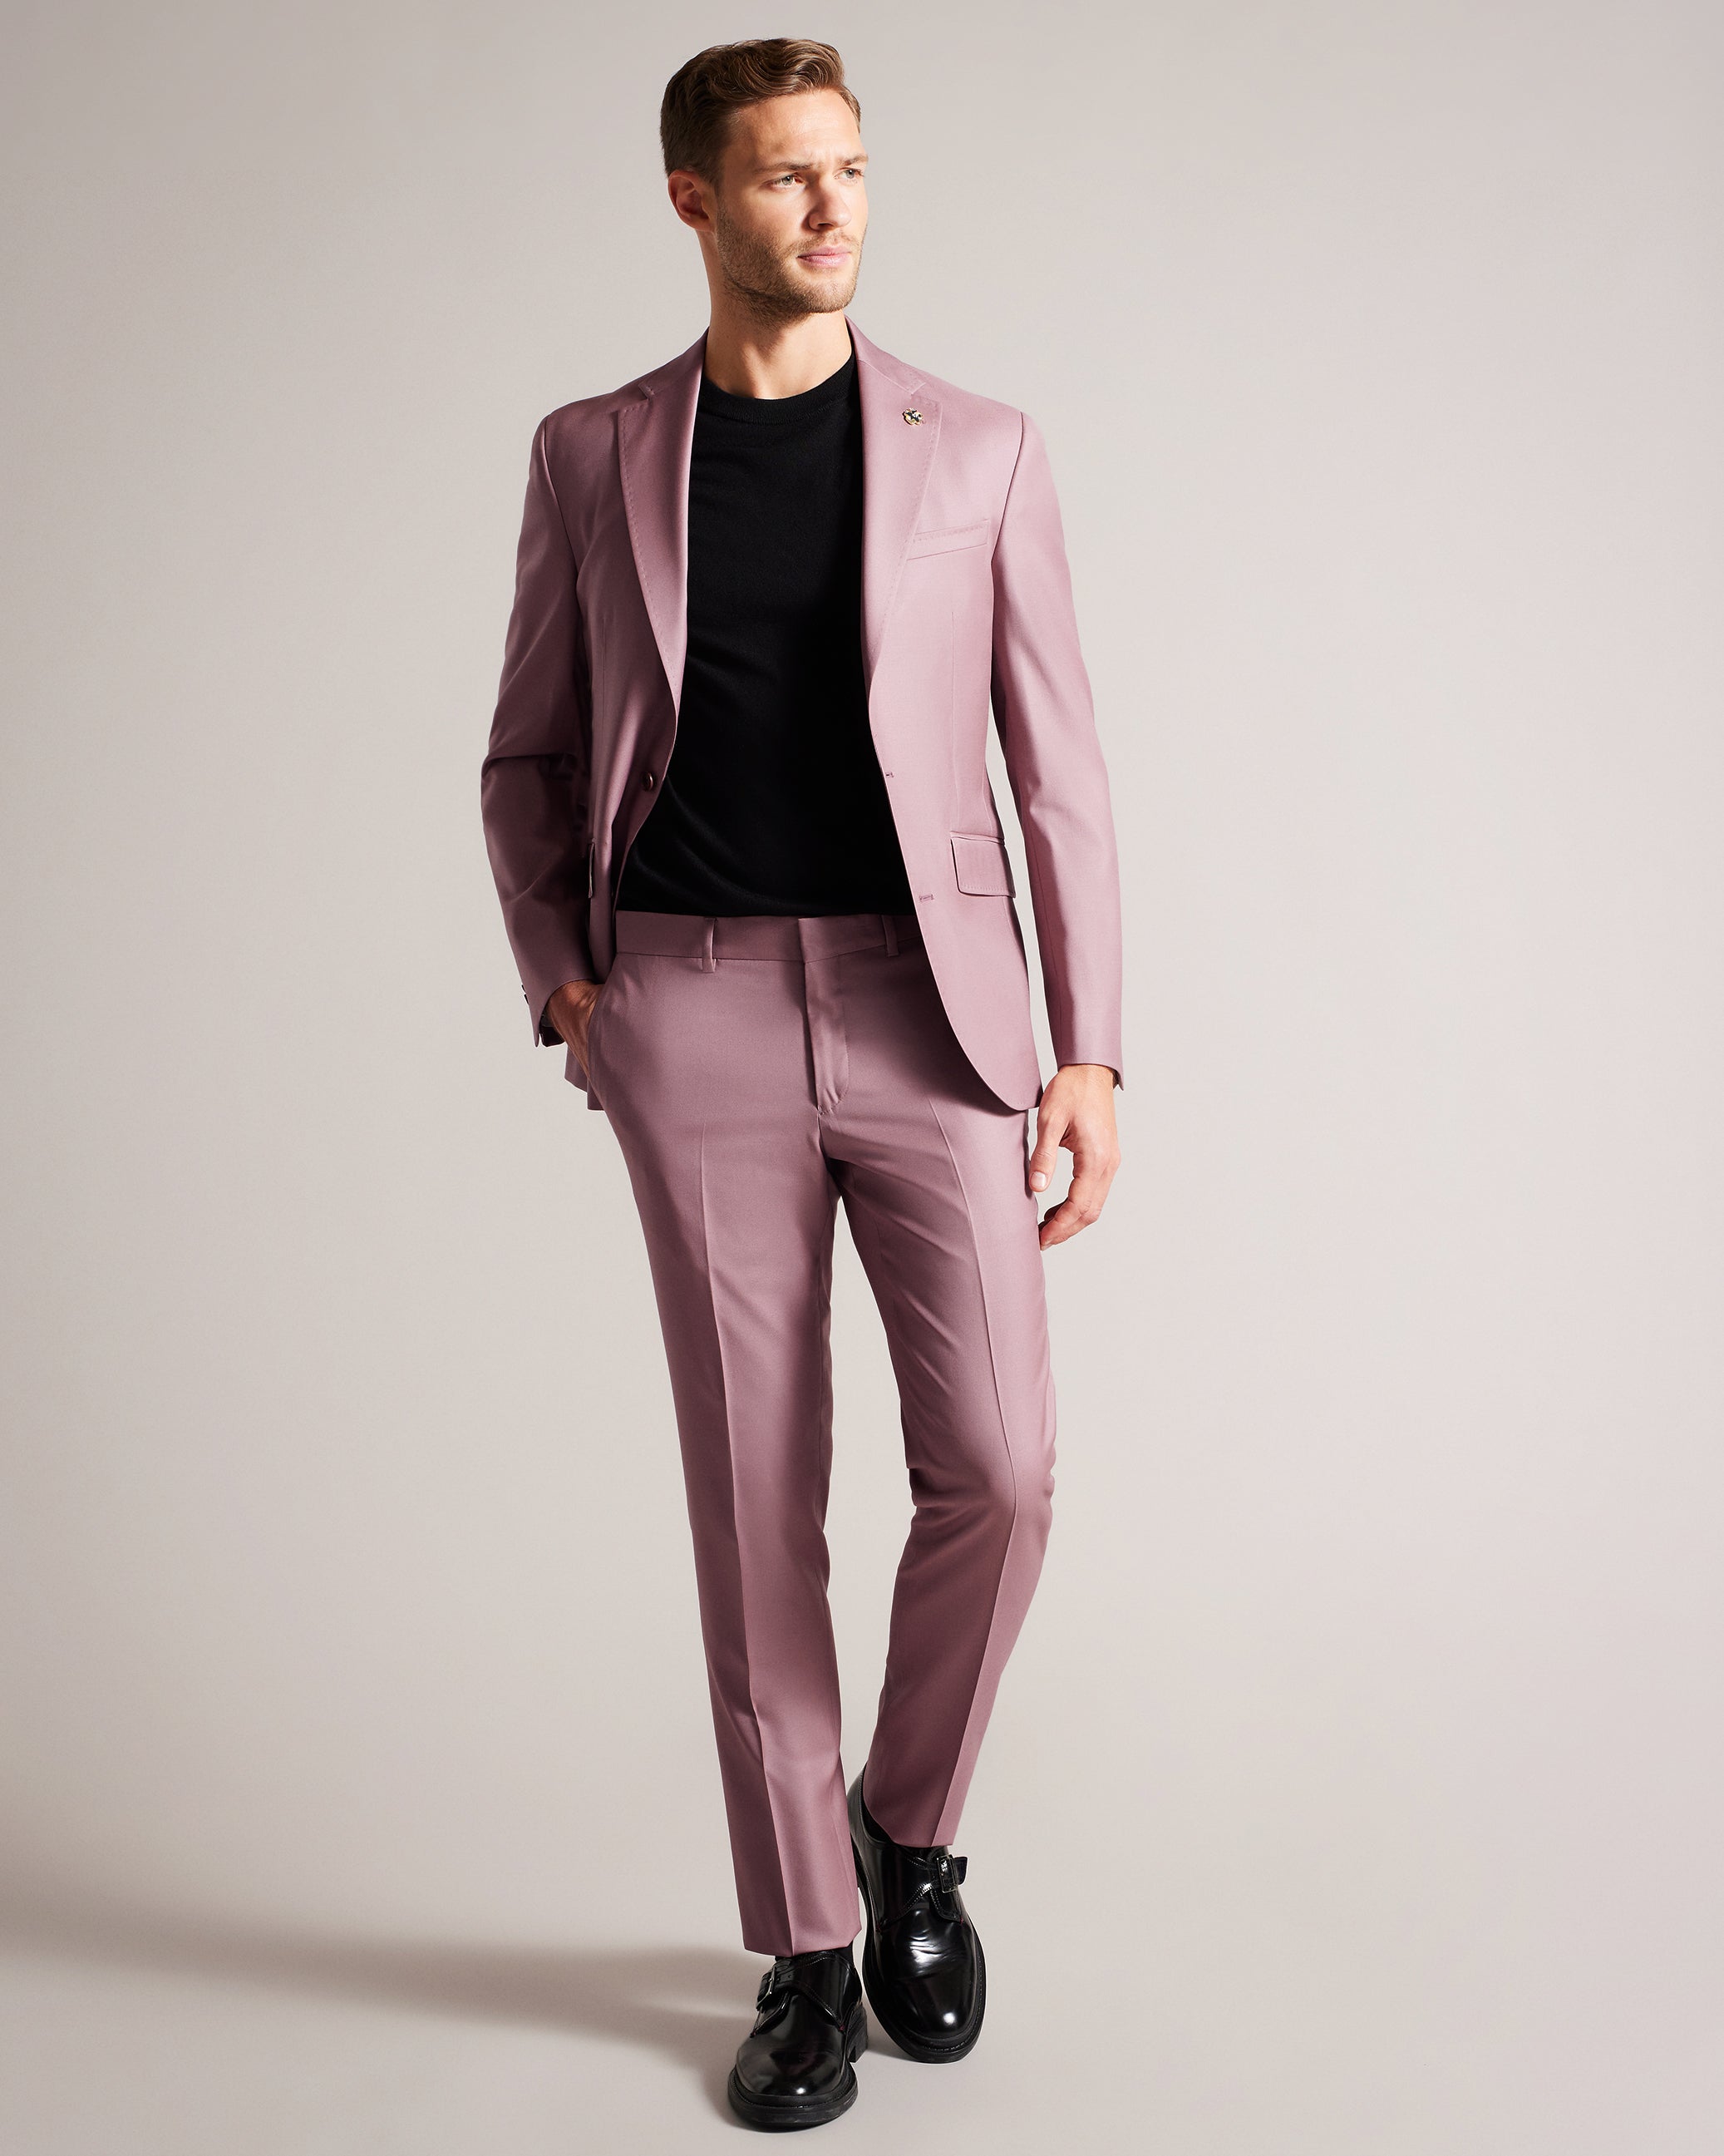 Update 203+ light pink suit latest